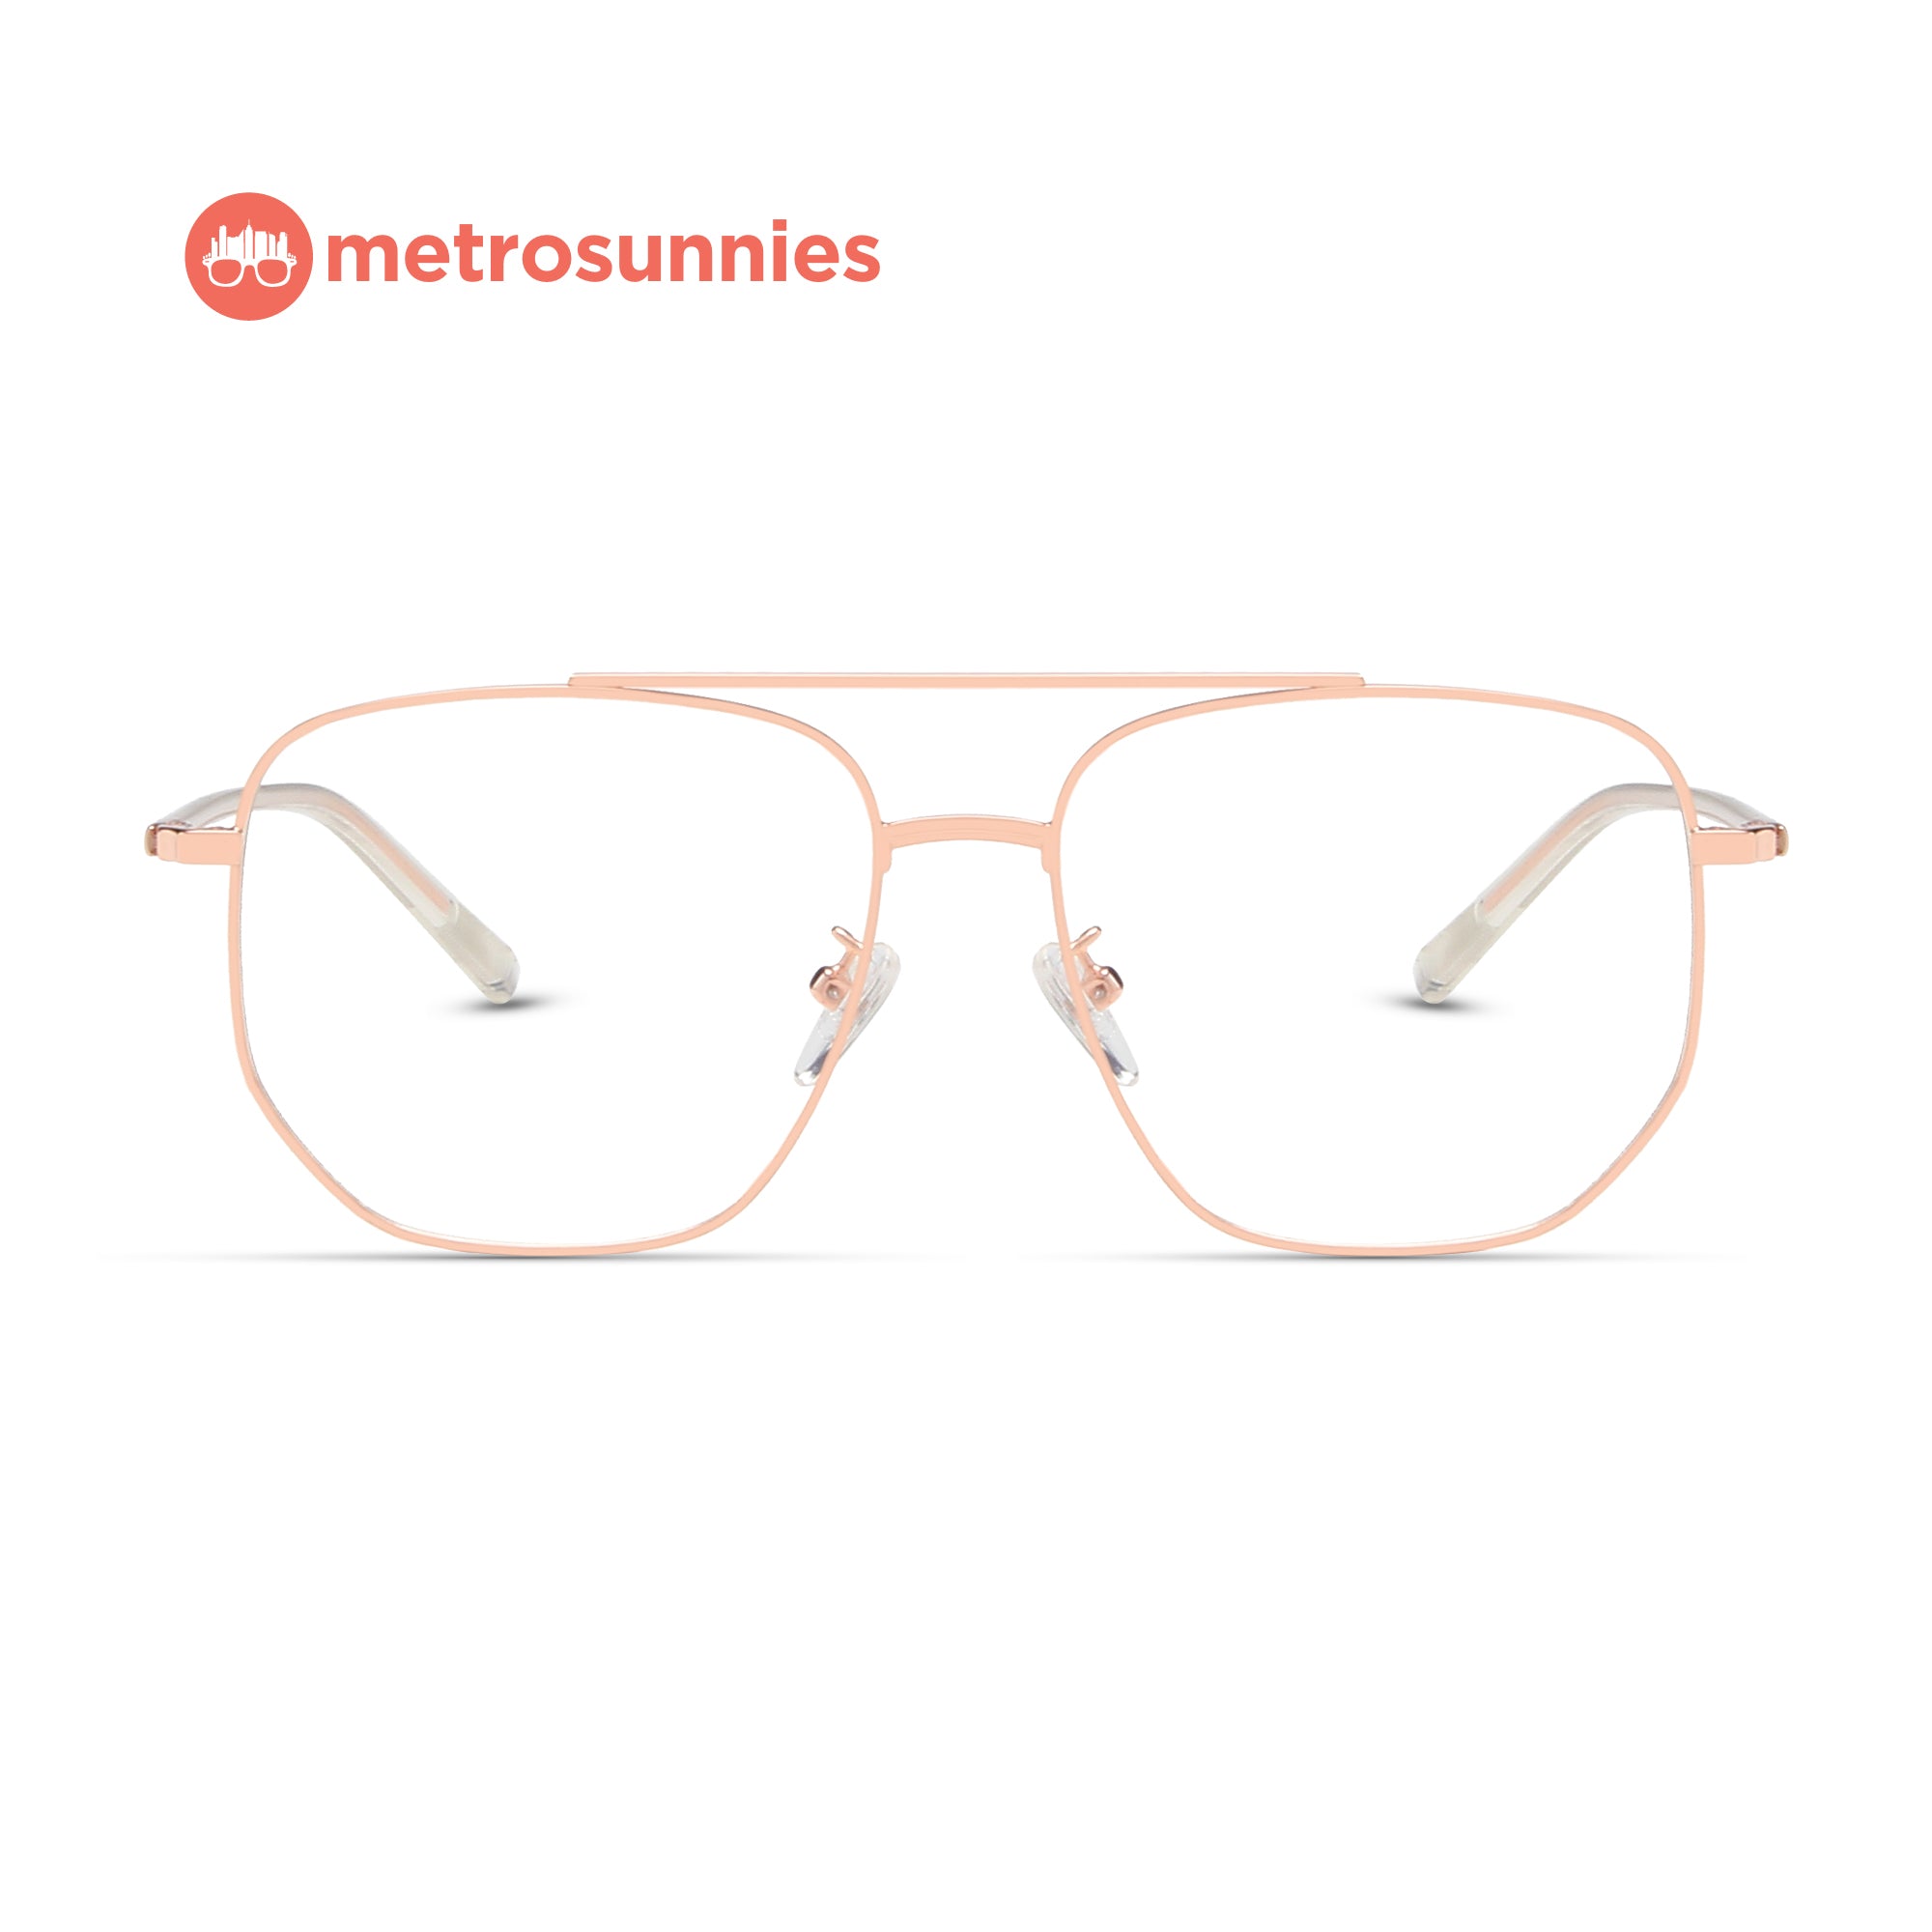 MetroSunnies Felix Specs (Rose Gold) / Con-Strain Blue Light / Anti-Radiation Computer Eyeglasses